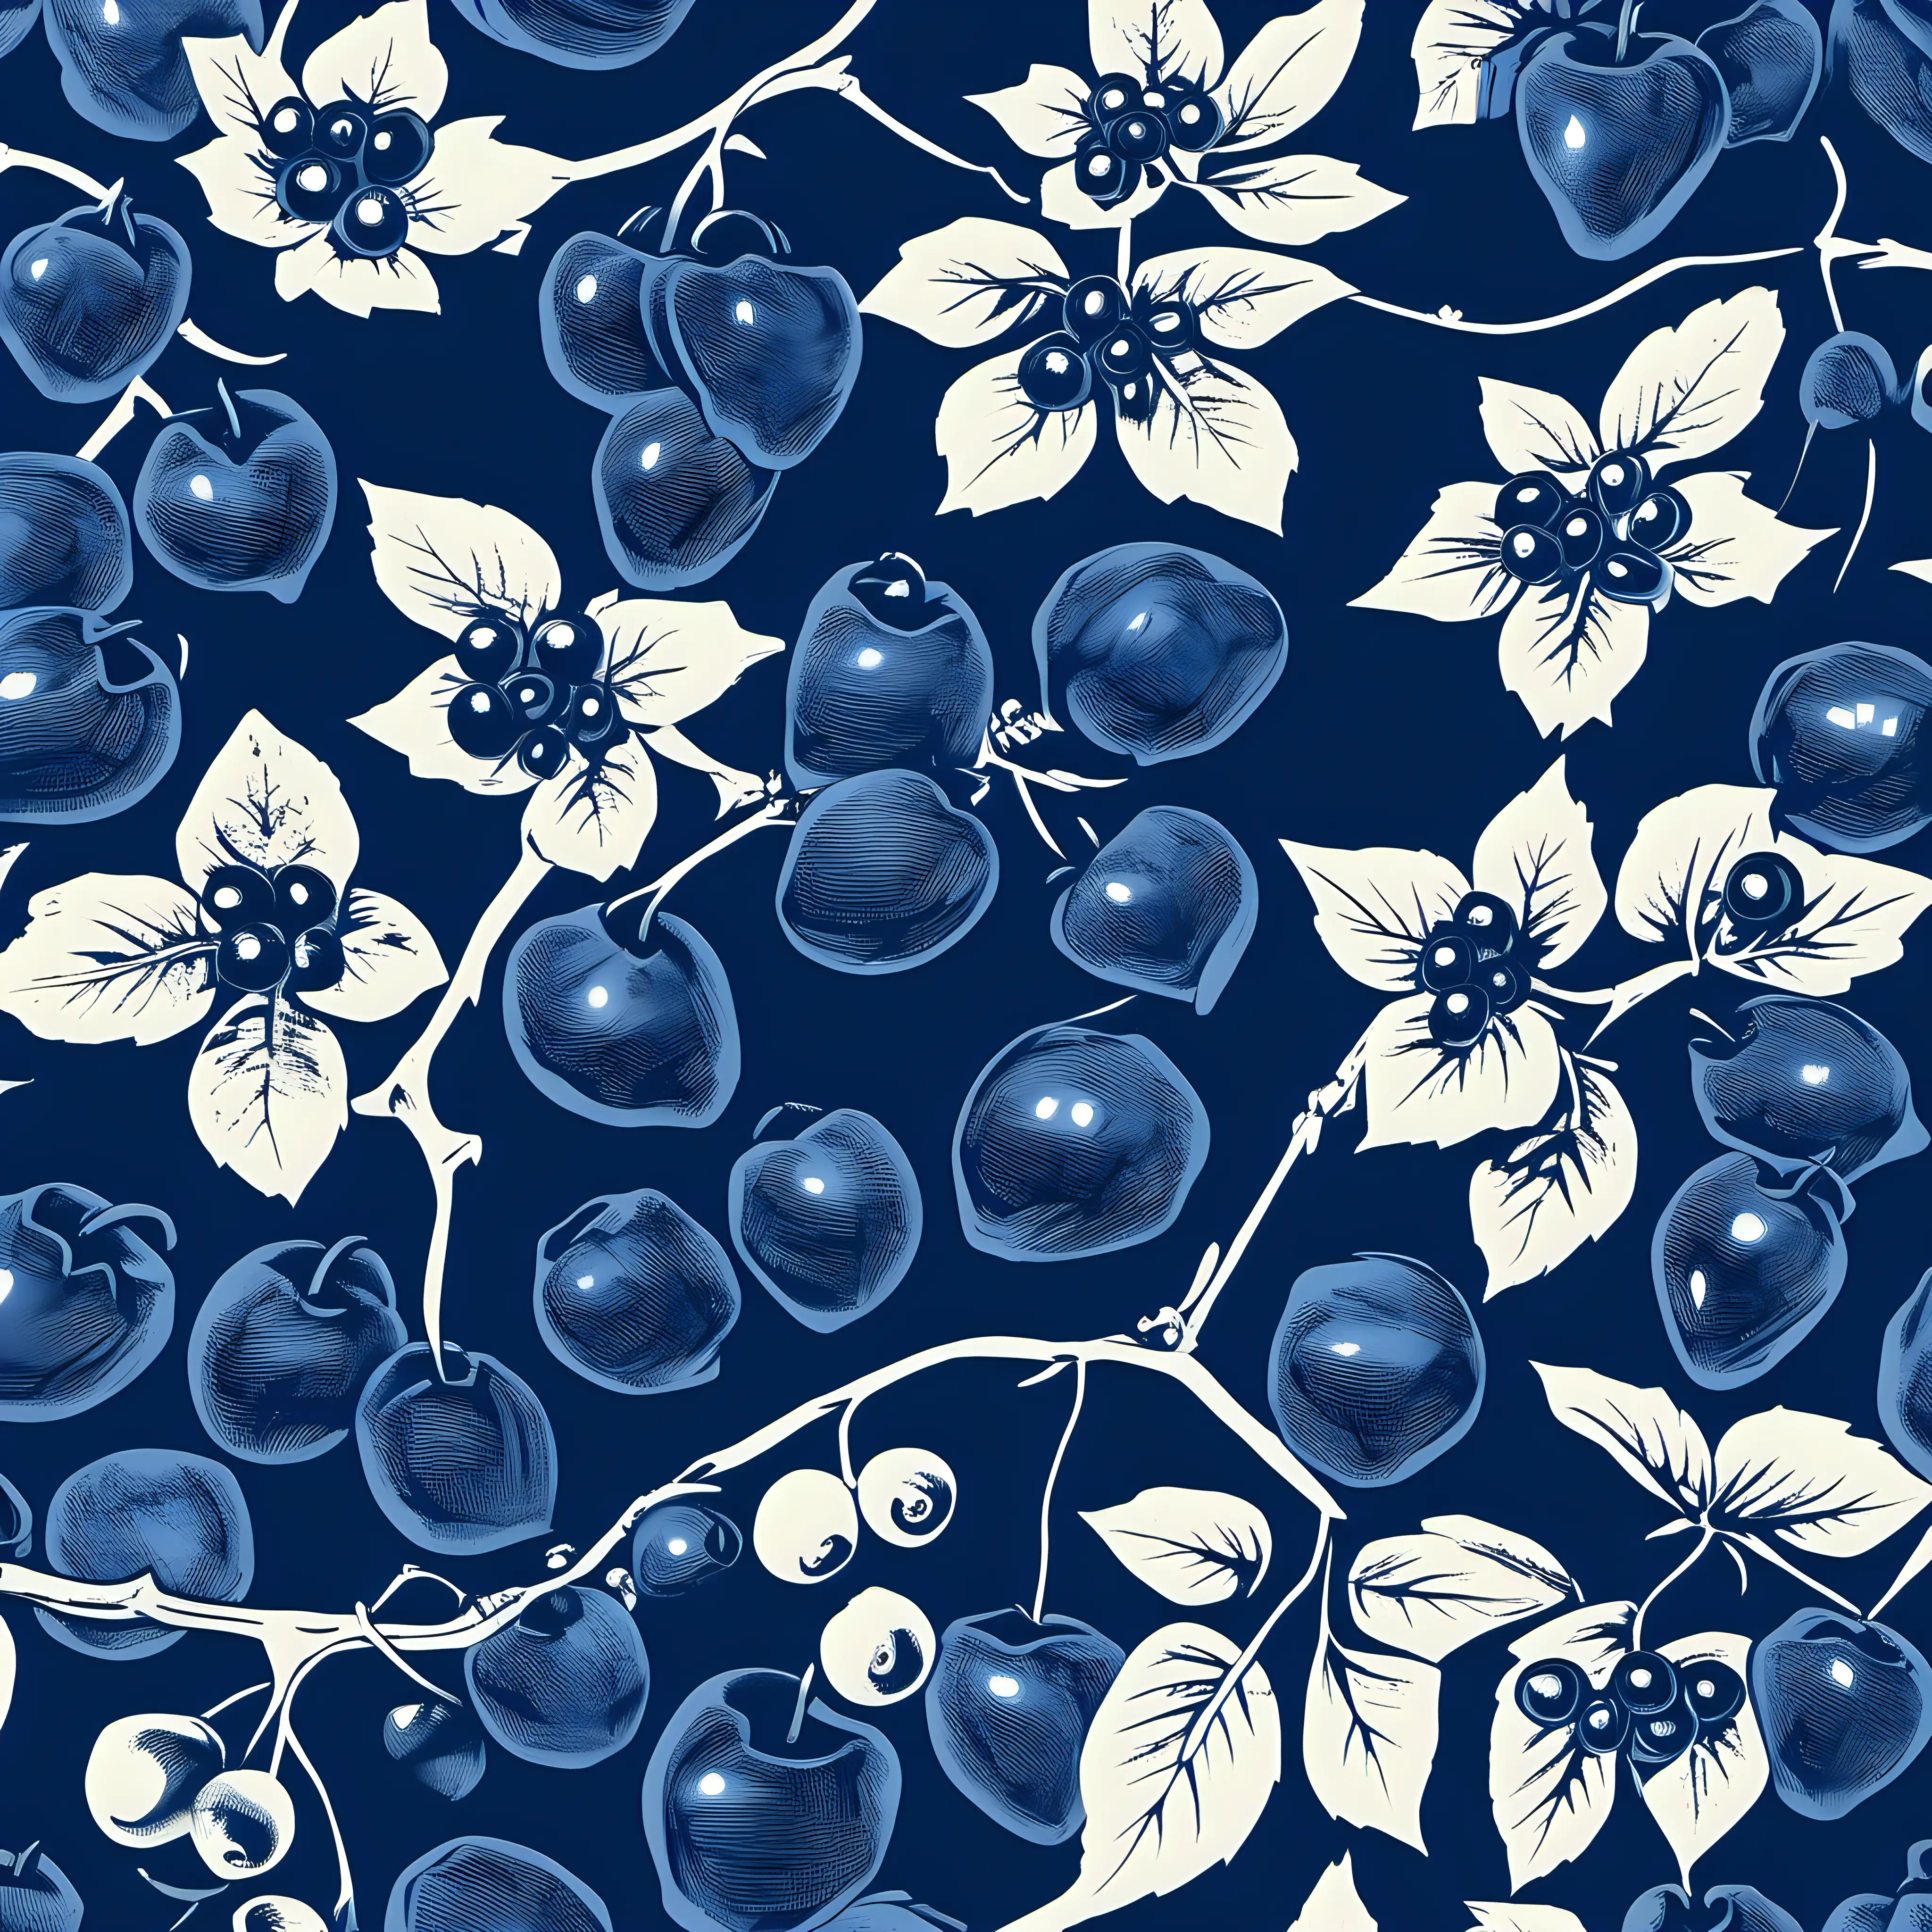 Botanic Elegance HandPrinted Blueberry Vine Art Inspired by Andy Warhol